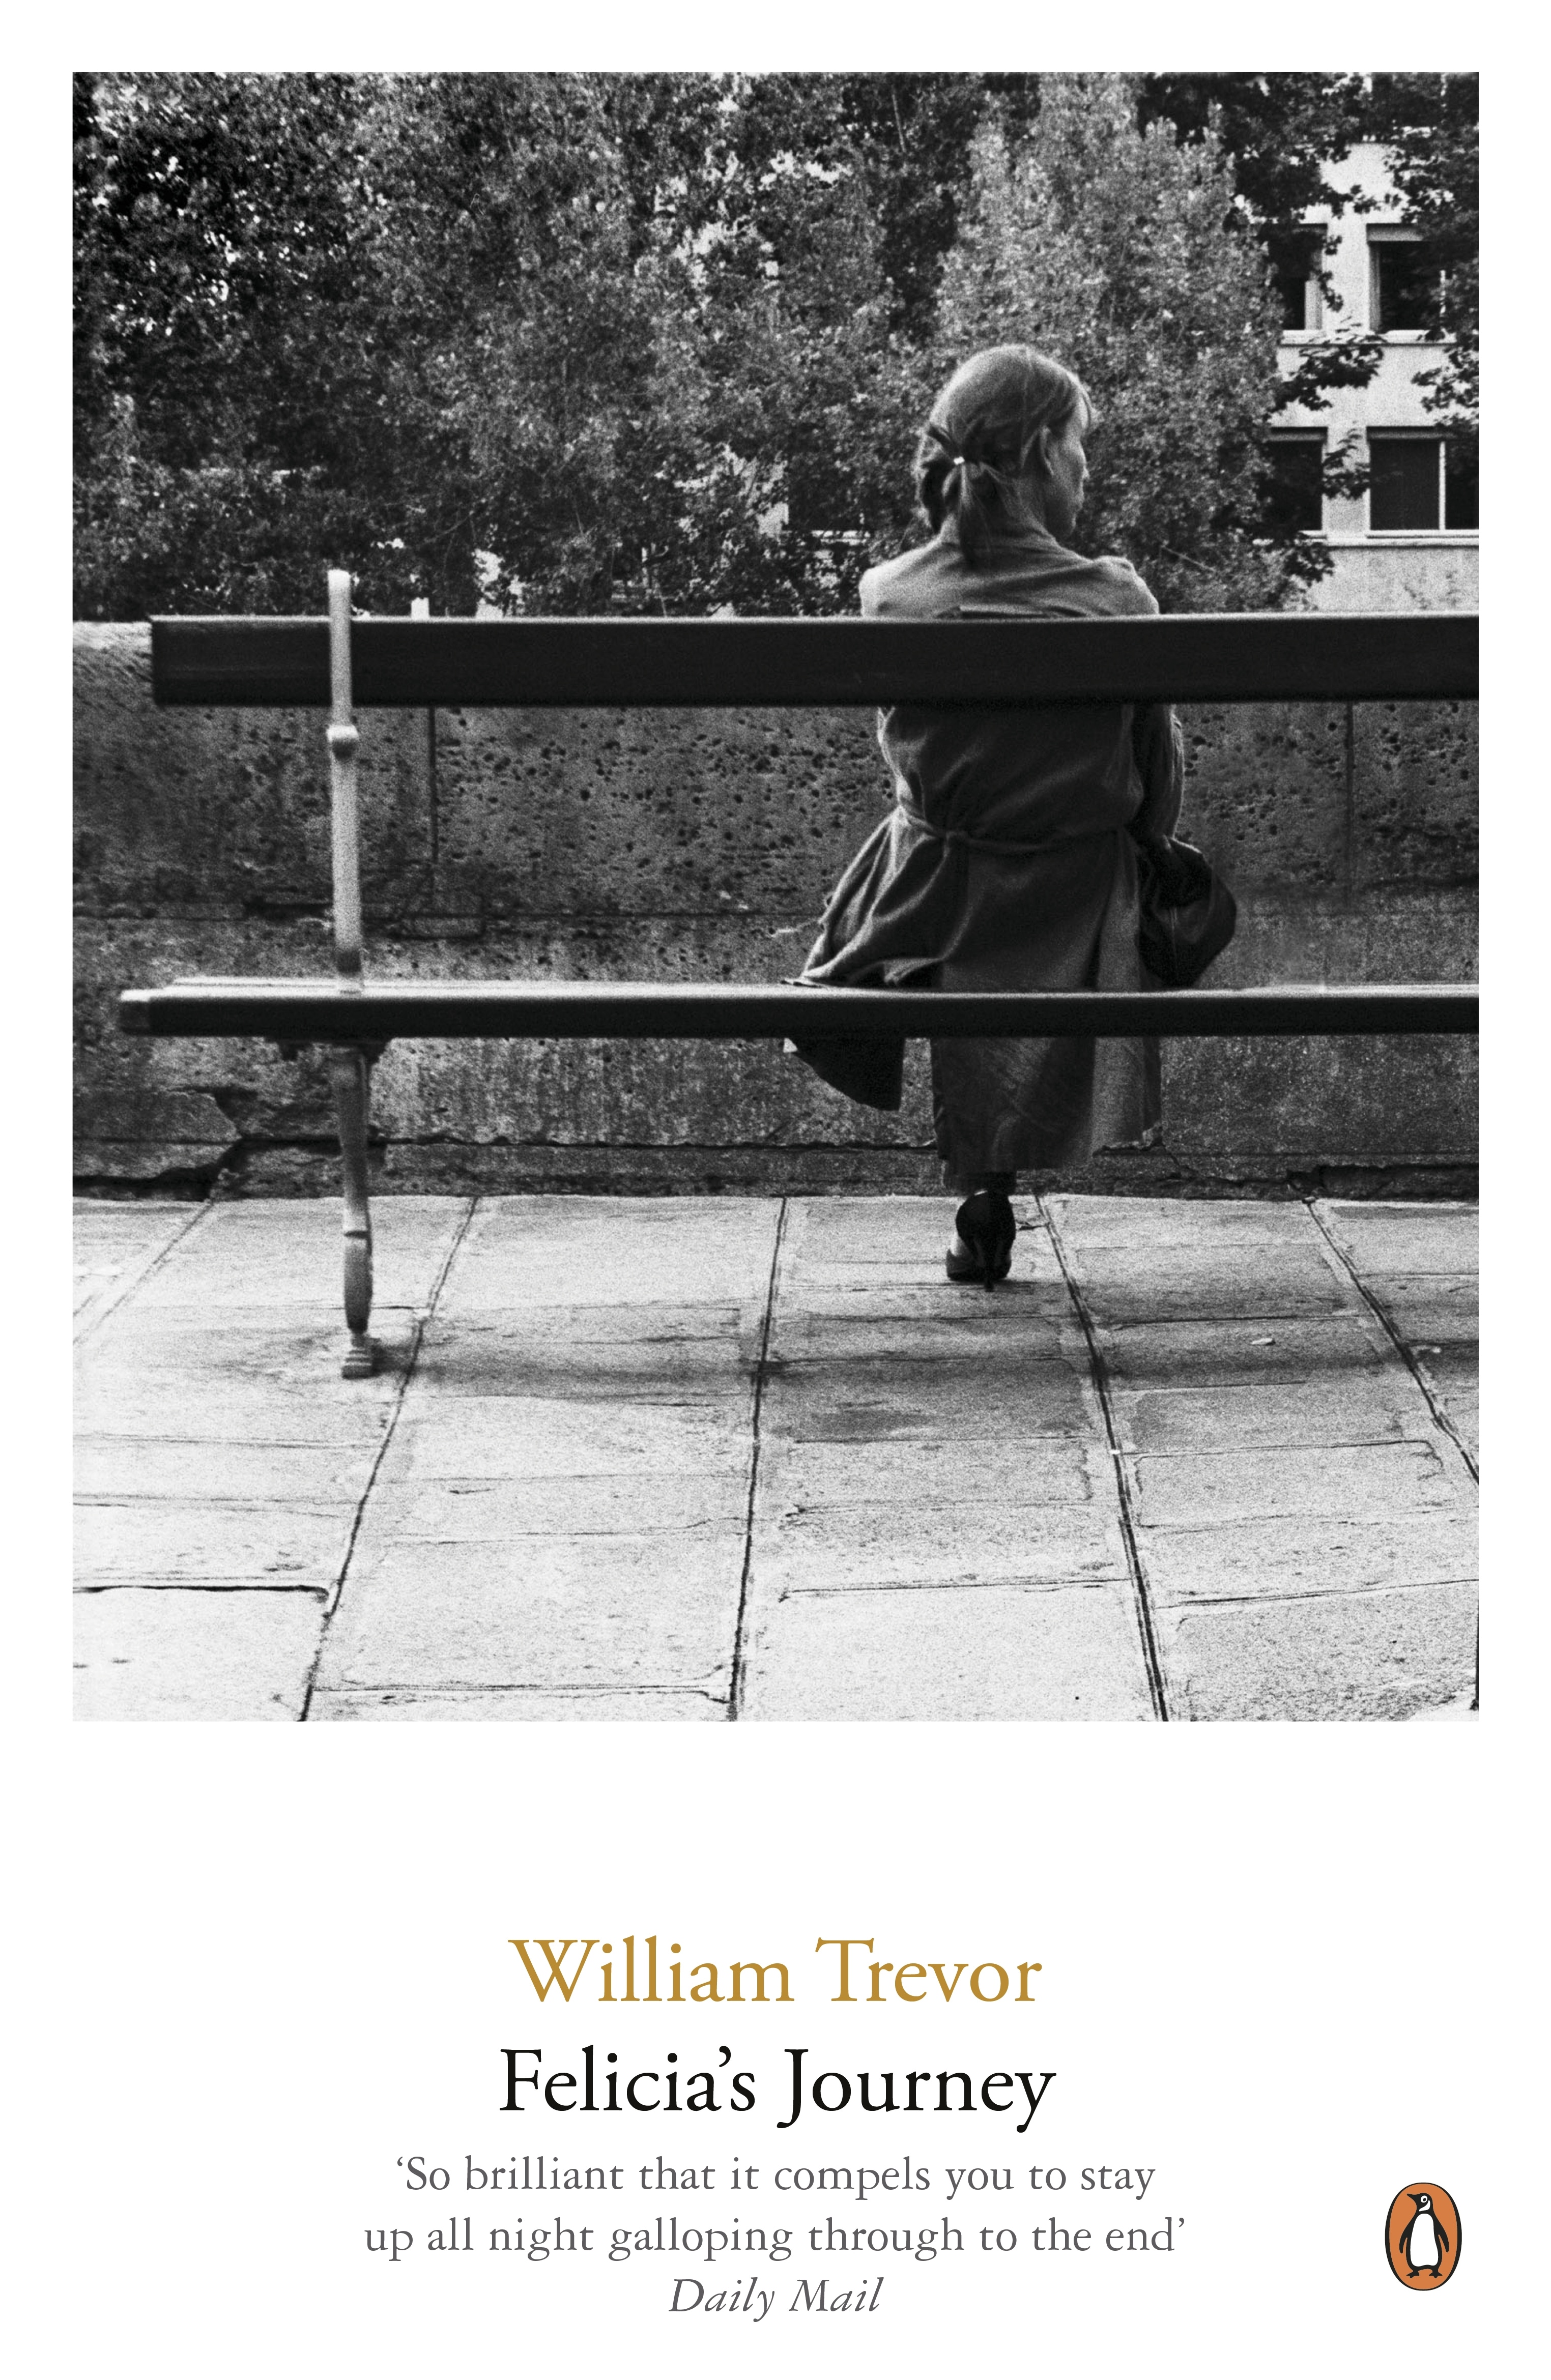 Book “Felicia's Journey” by William Trevor — April 1, 2010